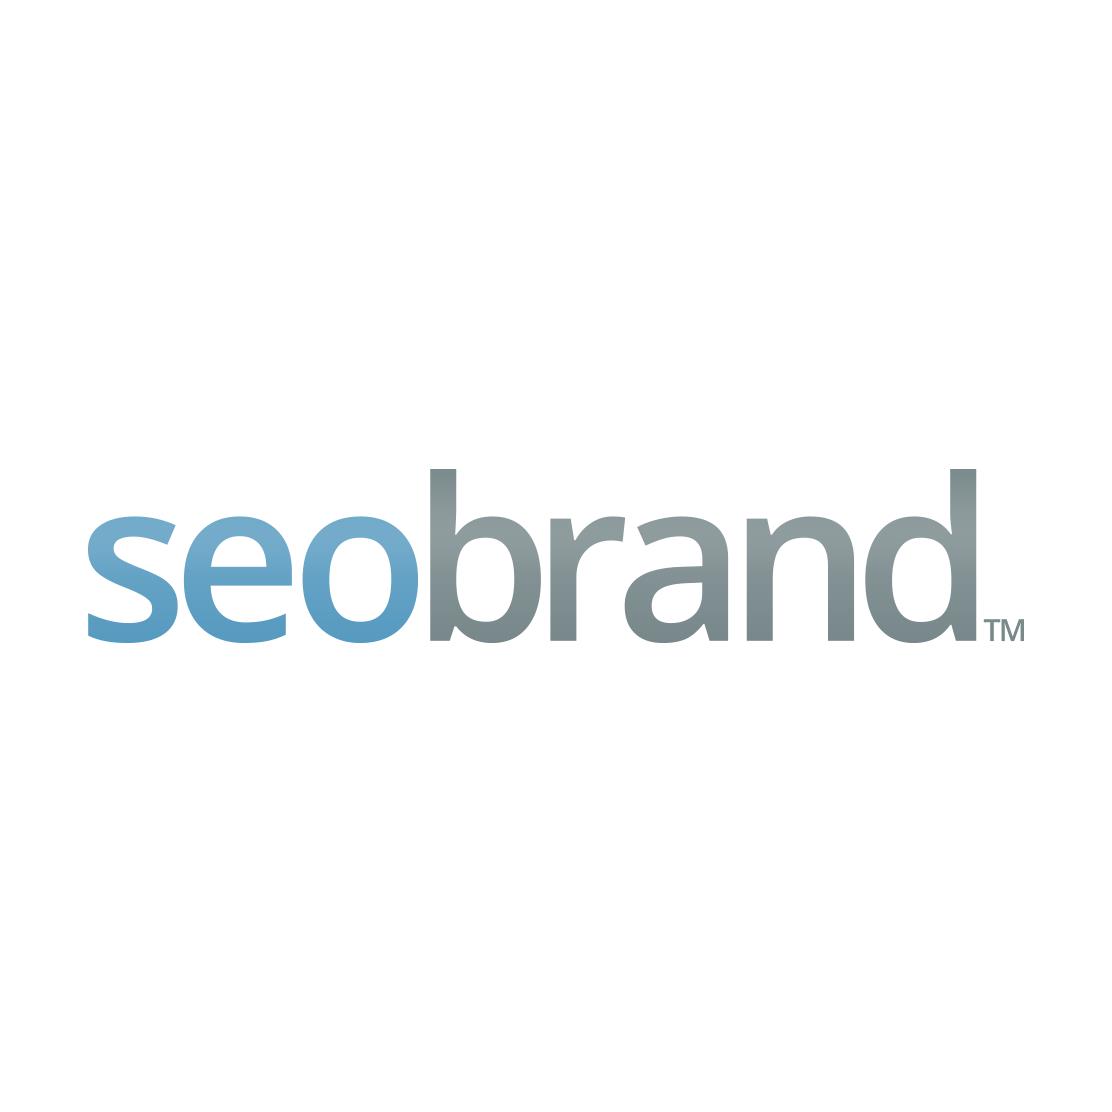 Best ORM Agency Logo: SEO Brand